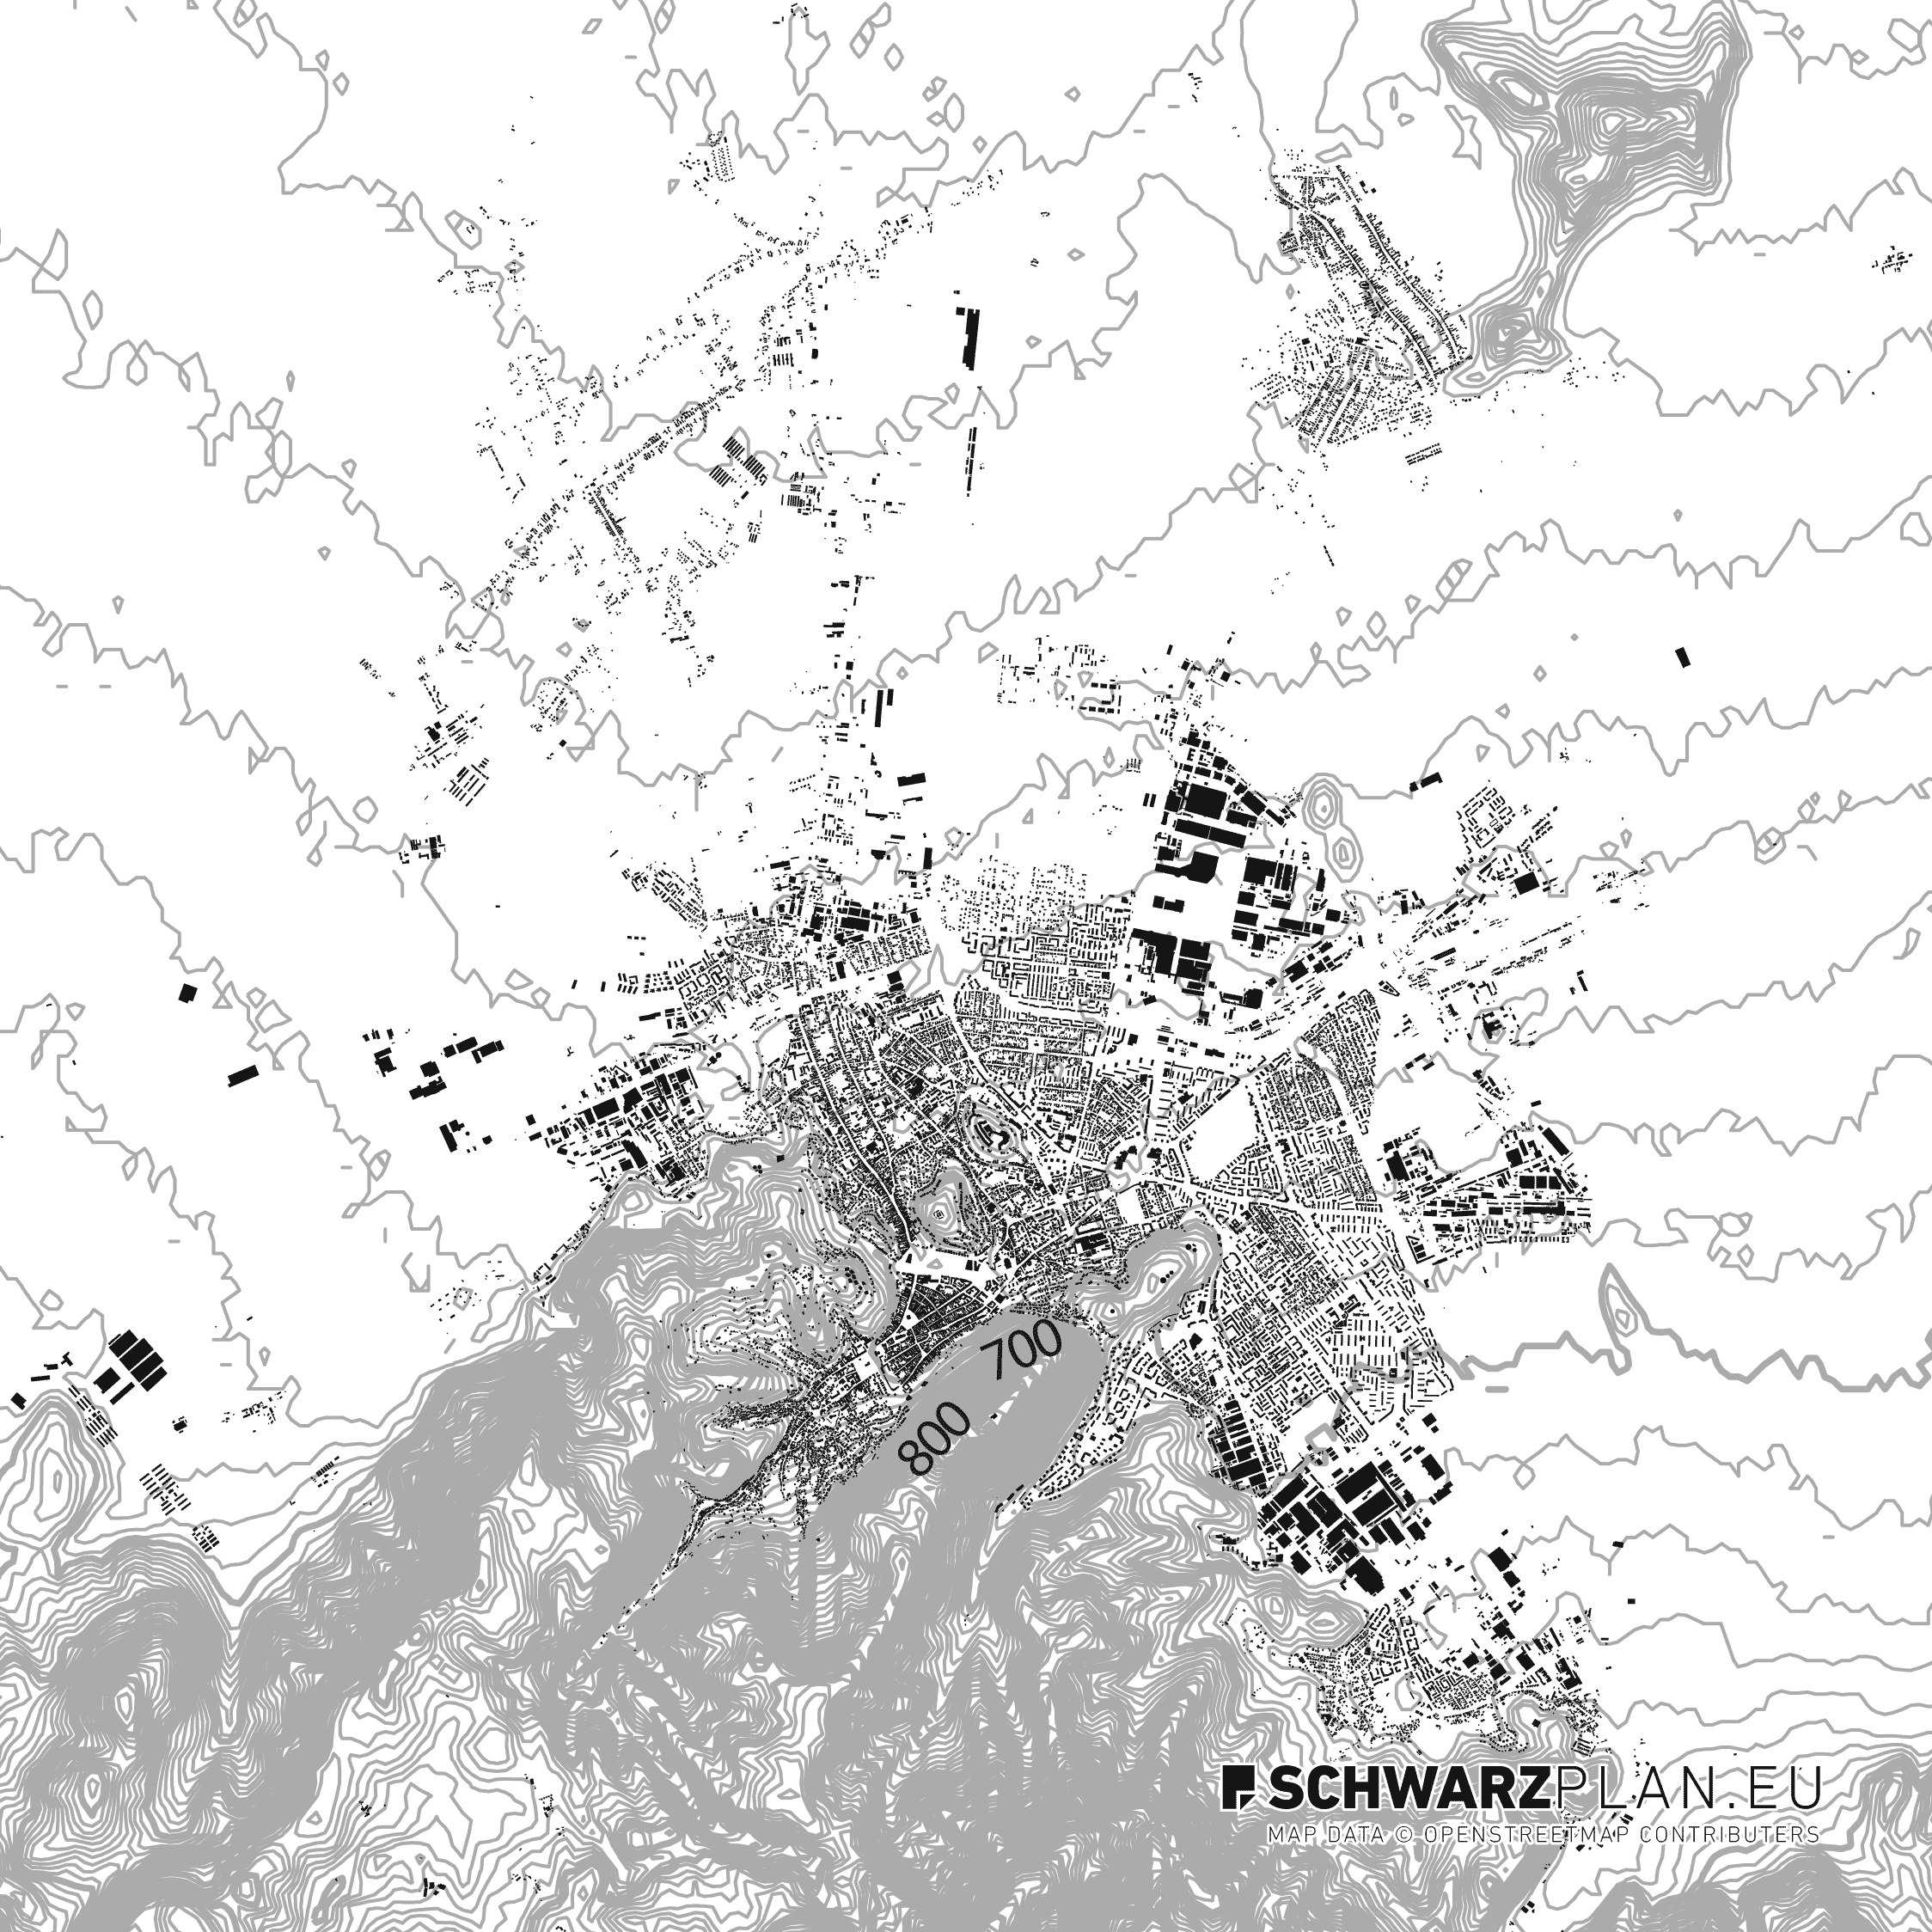 Figure ground plan of Brasov in Romania